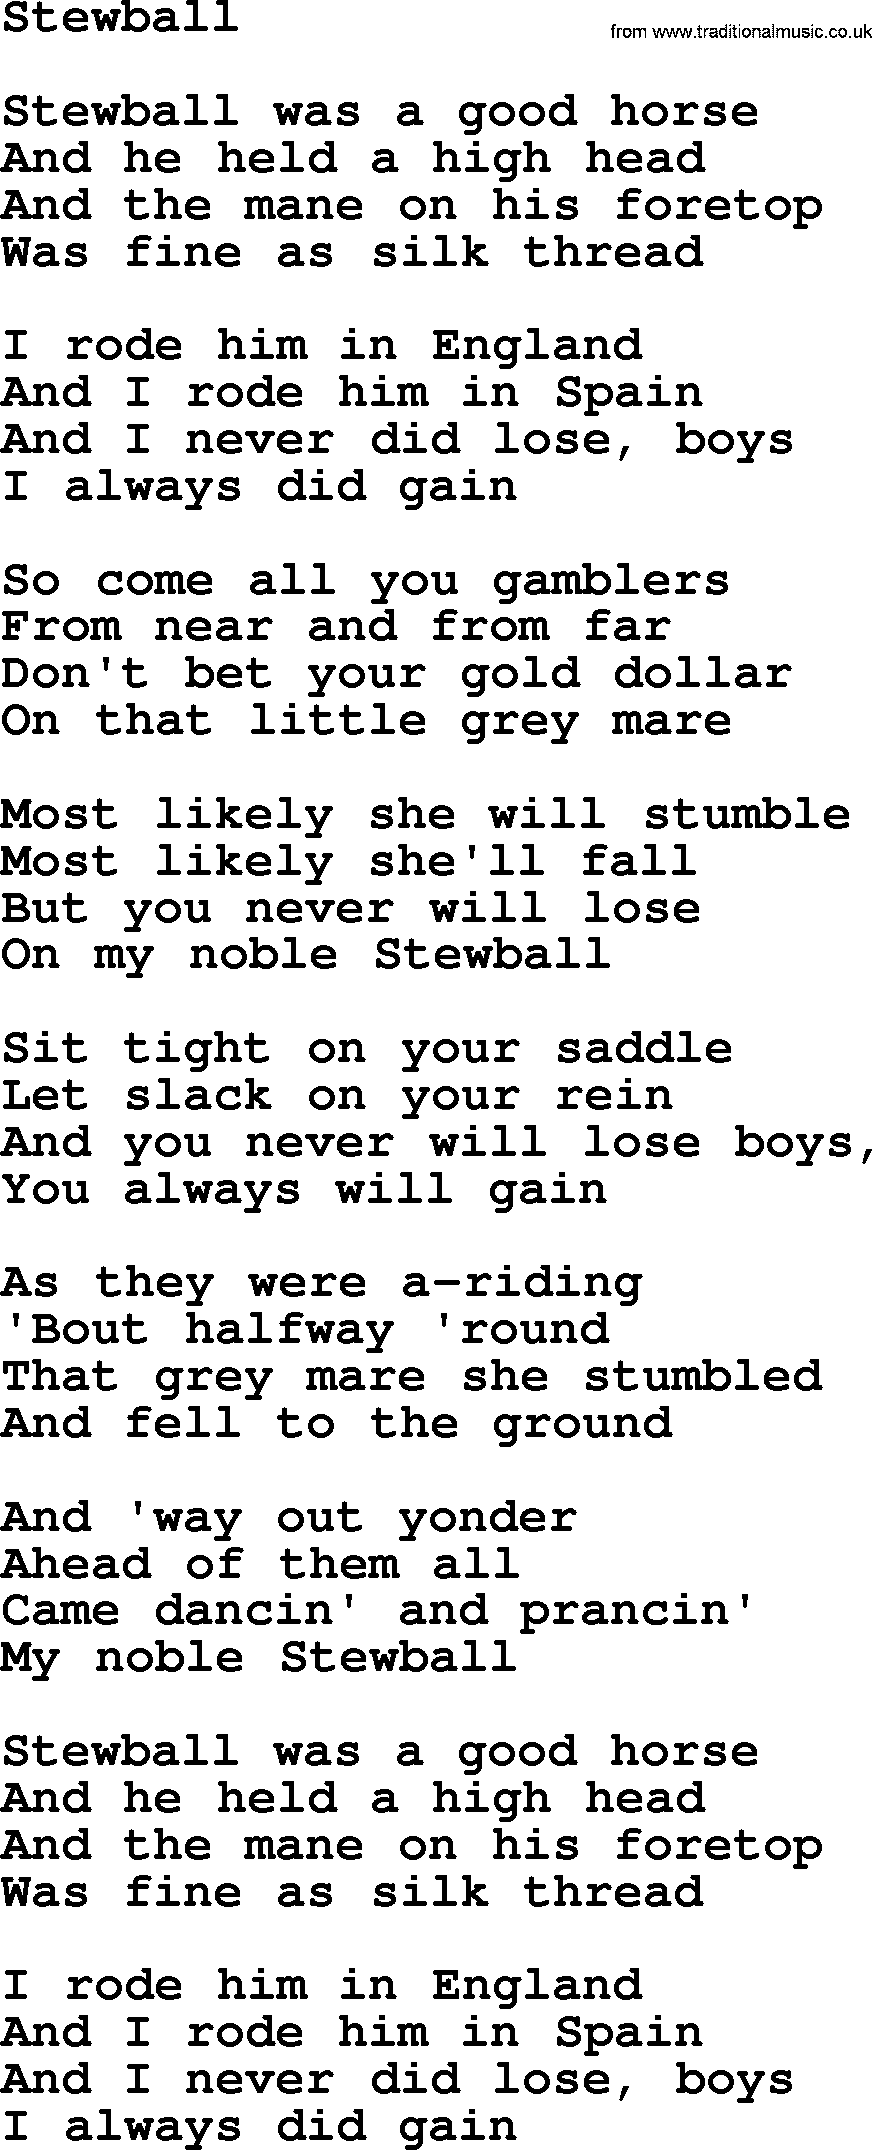 Woody Guthrie song Stewball lyrics